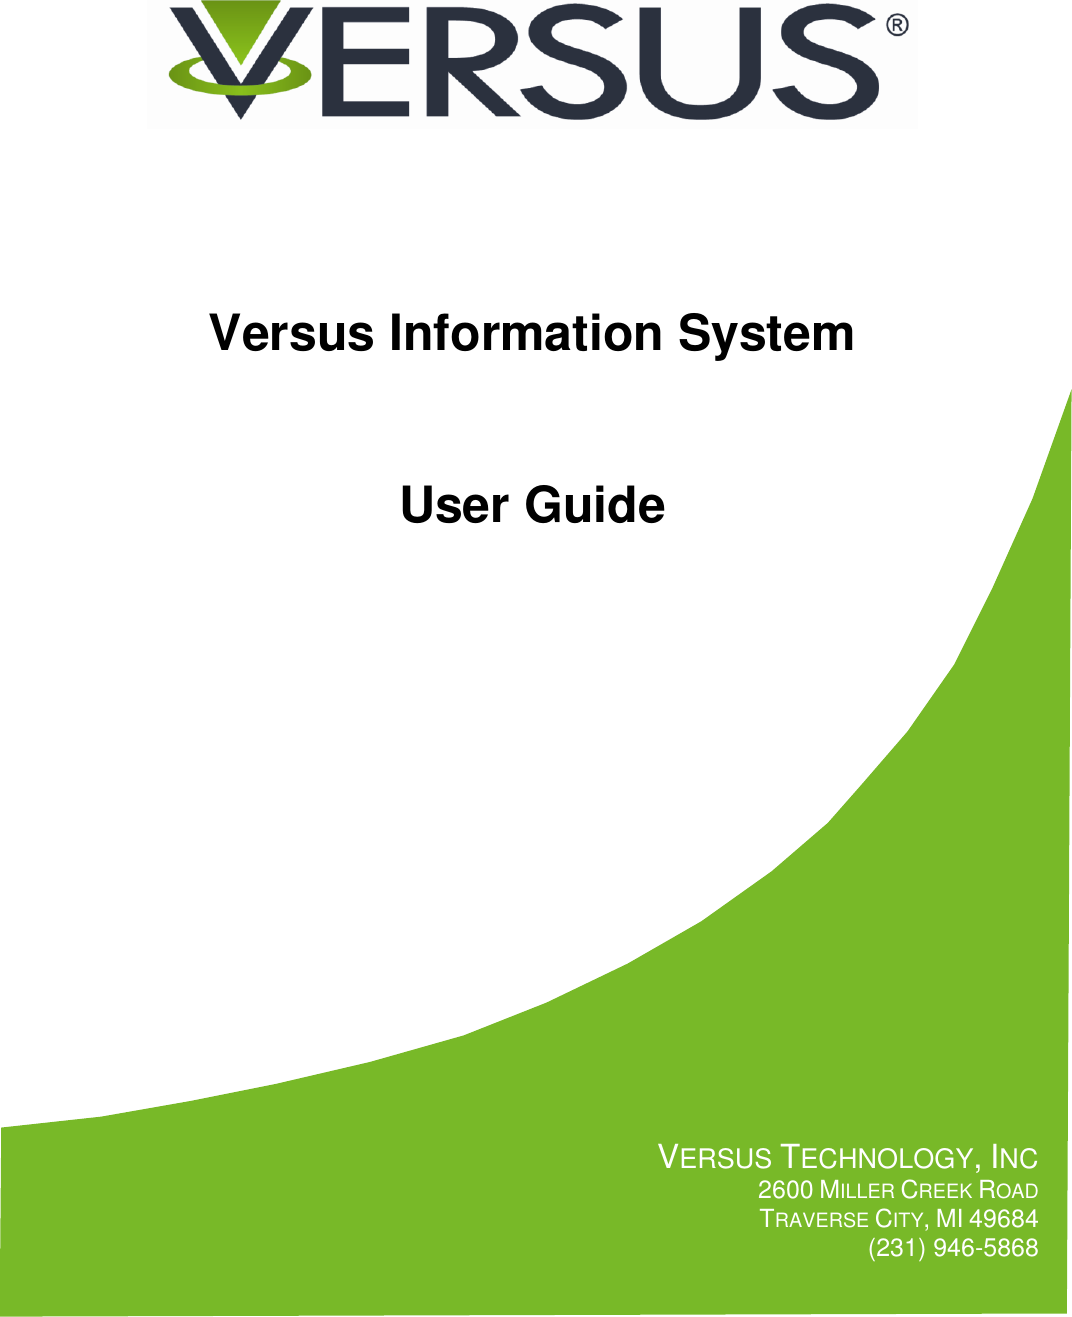         Versus Information System   User Guide                   VERSUS TECHNOLOGY, INC 2600 MILLER CREEK ROAD  TRAVERSE CITY, MI 49684 (231) 946-5868